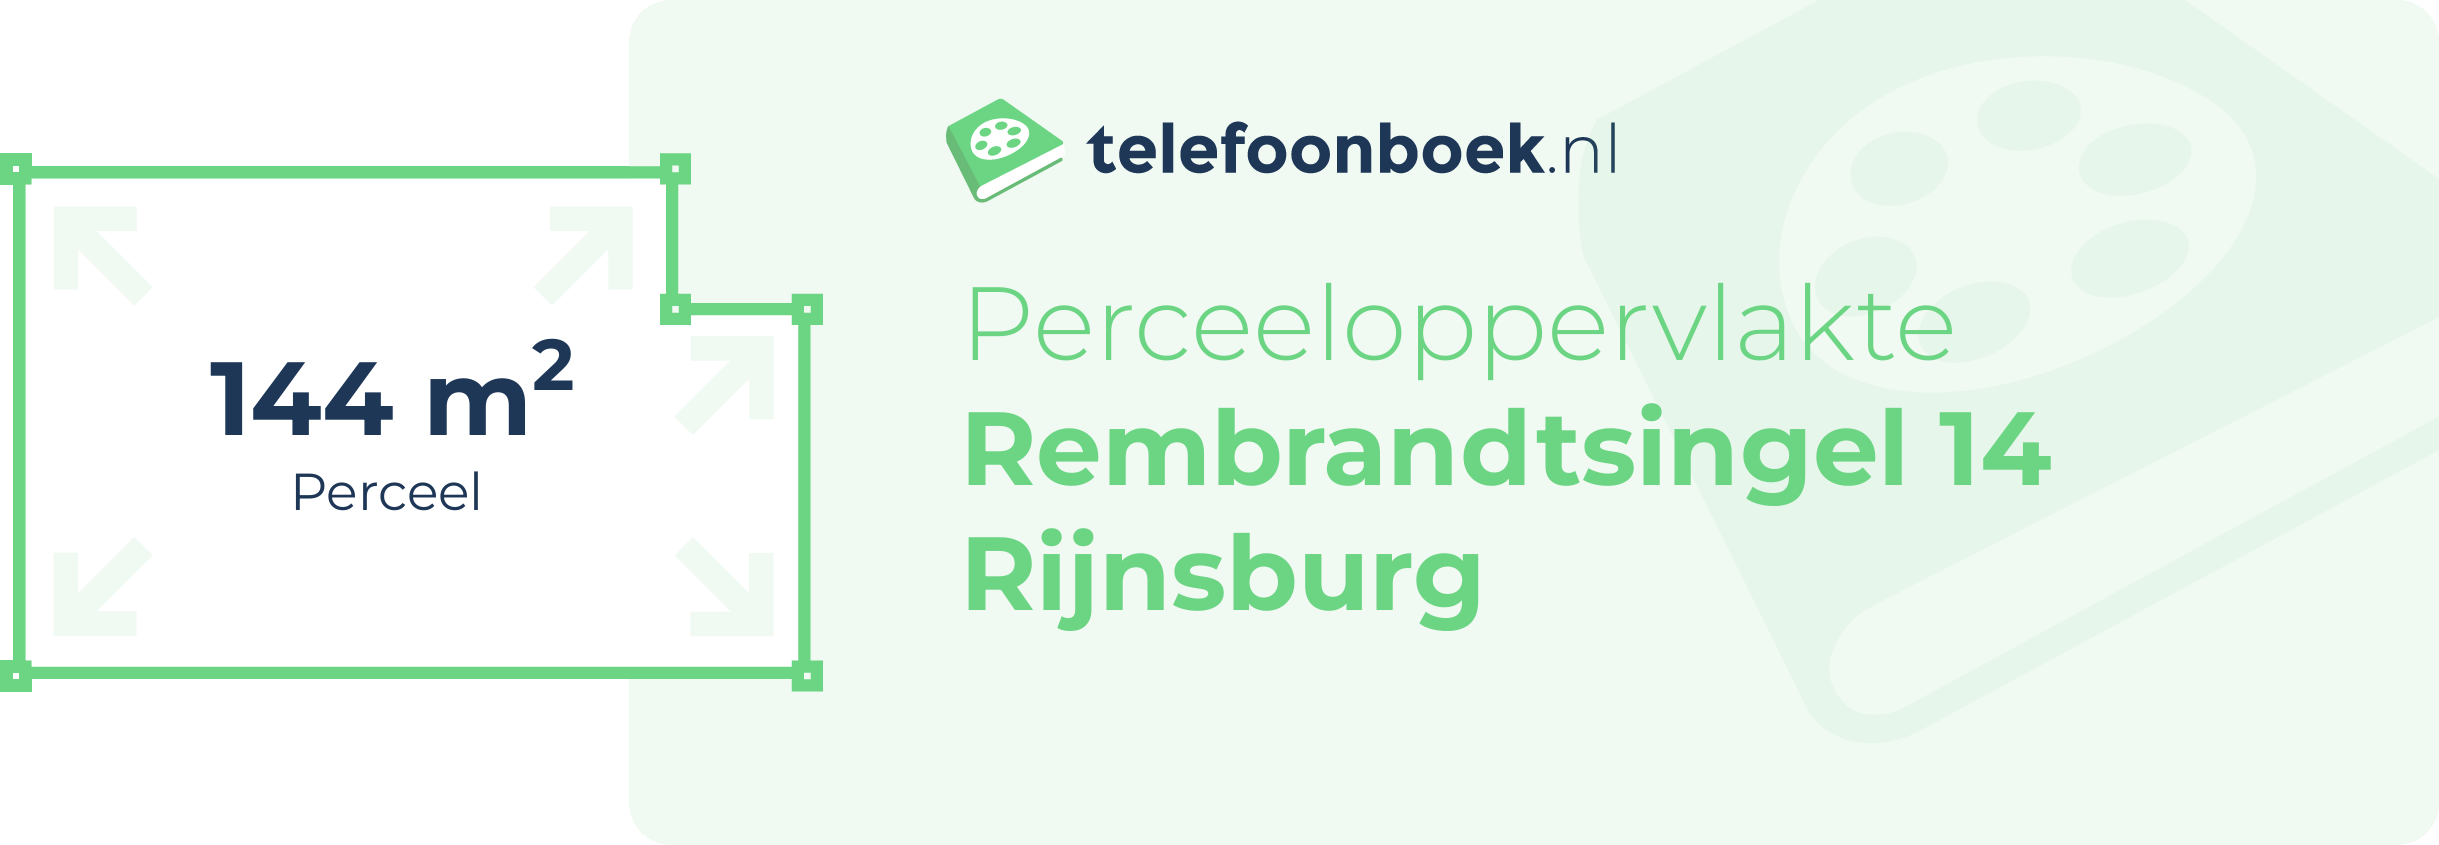 Perceeloppervlakte Rembrandtsingel 14 Rijnsburg